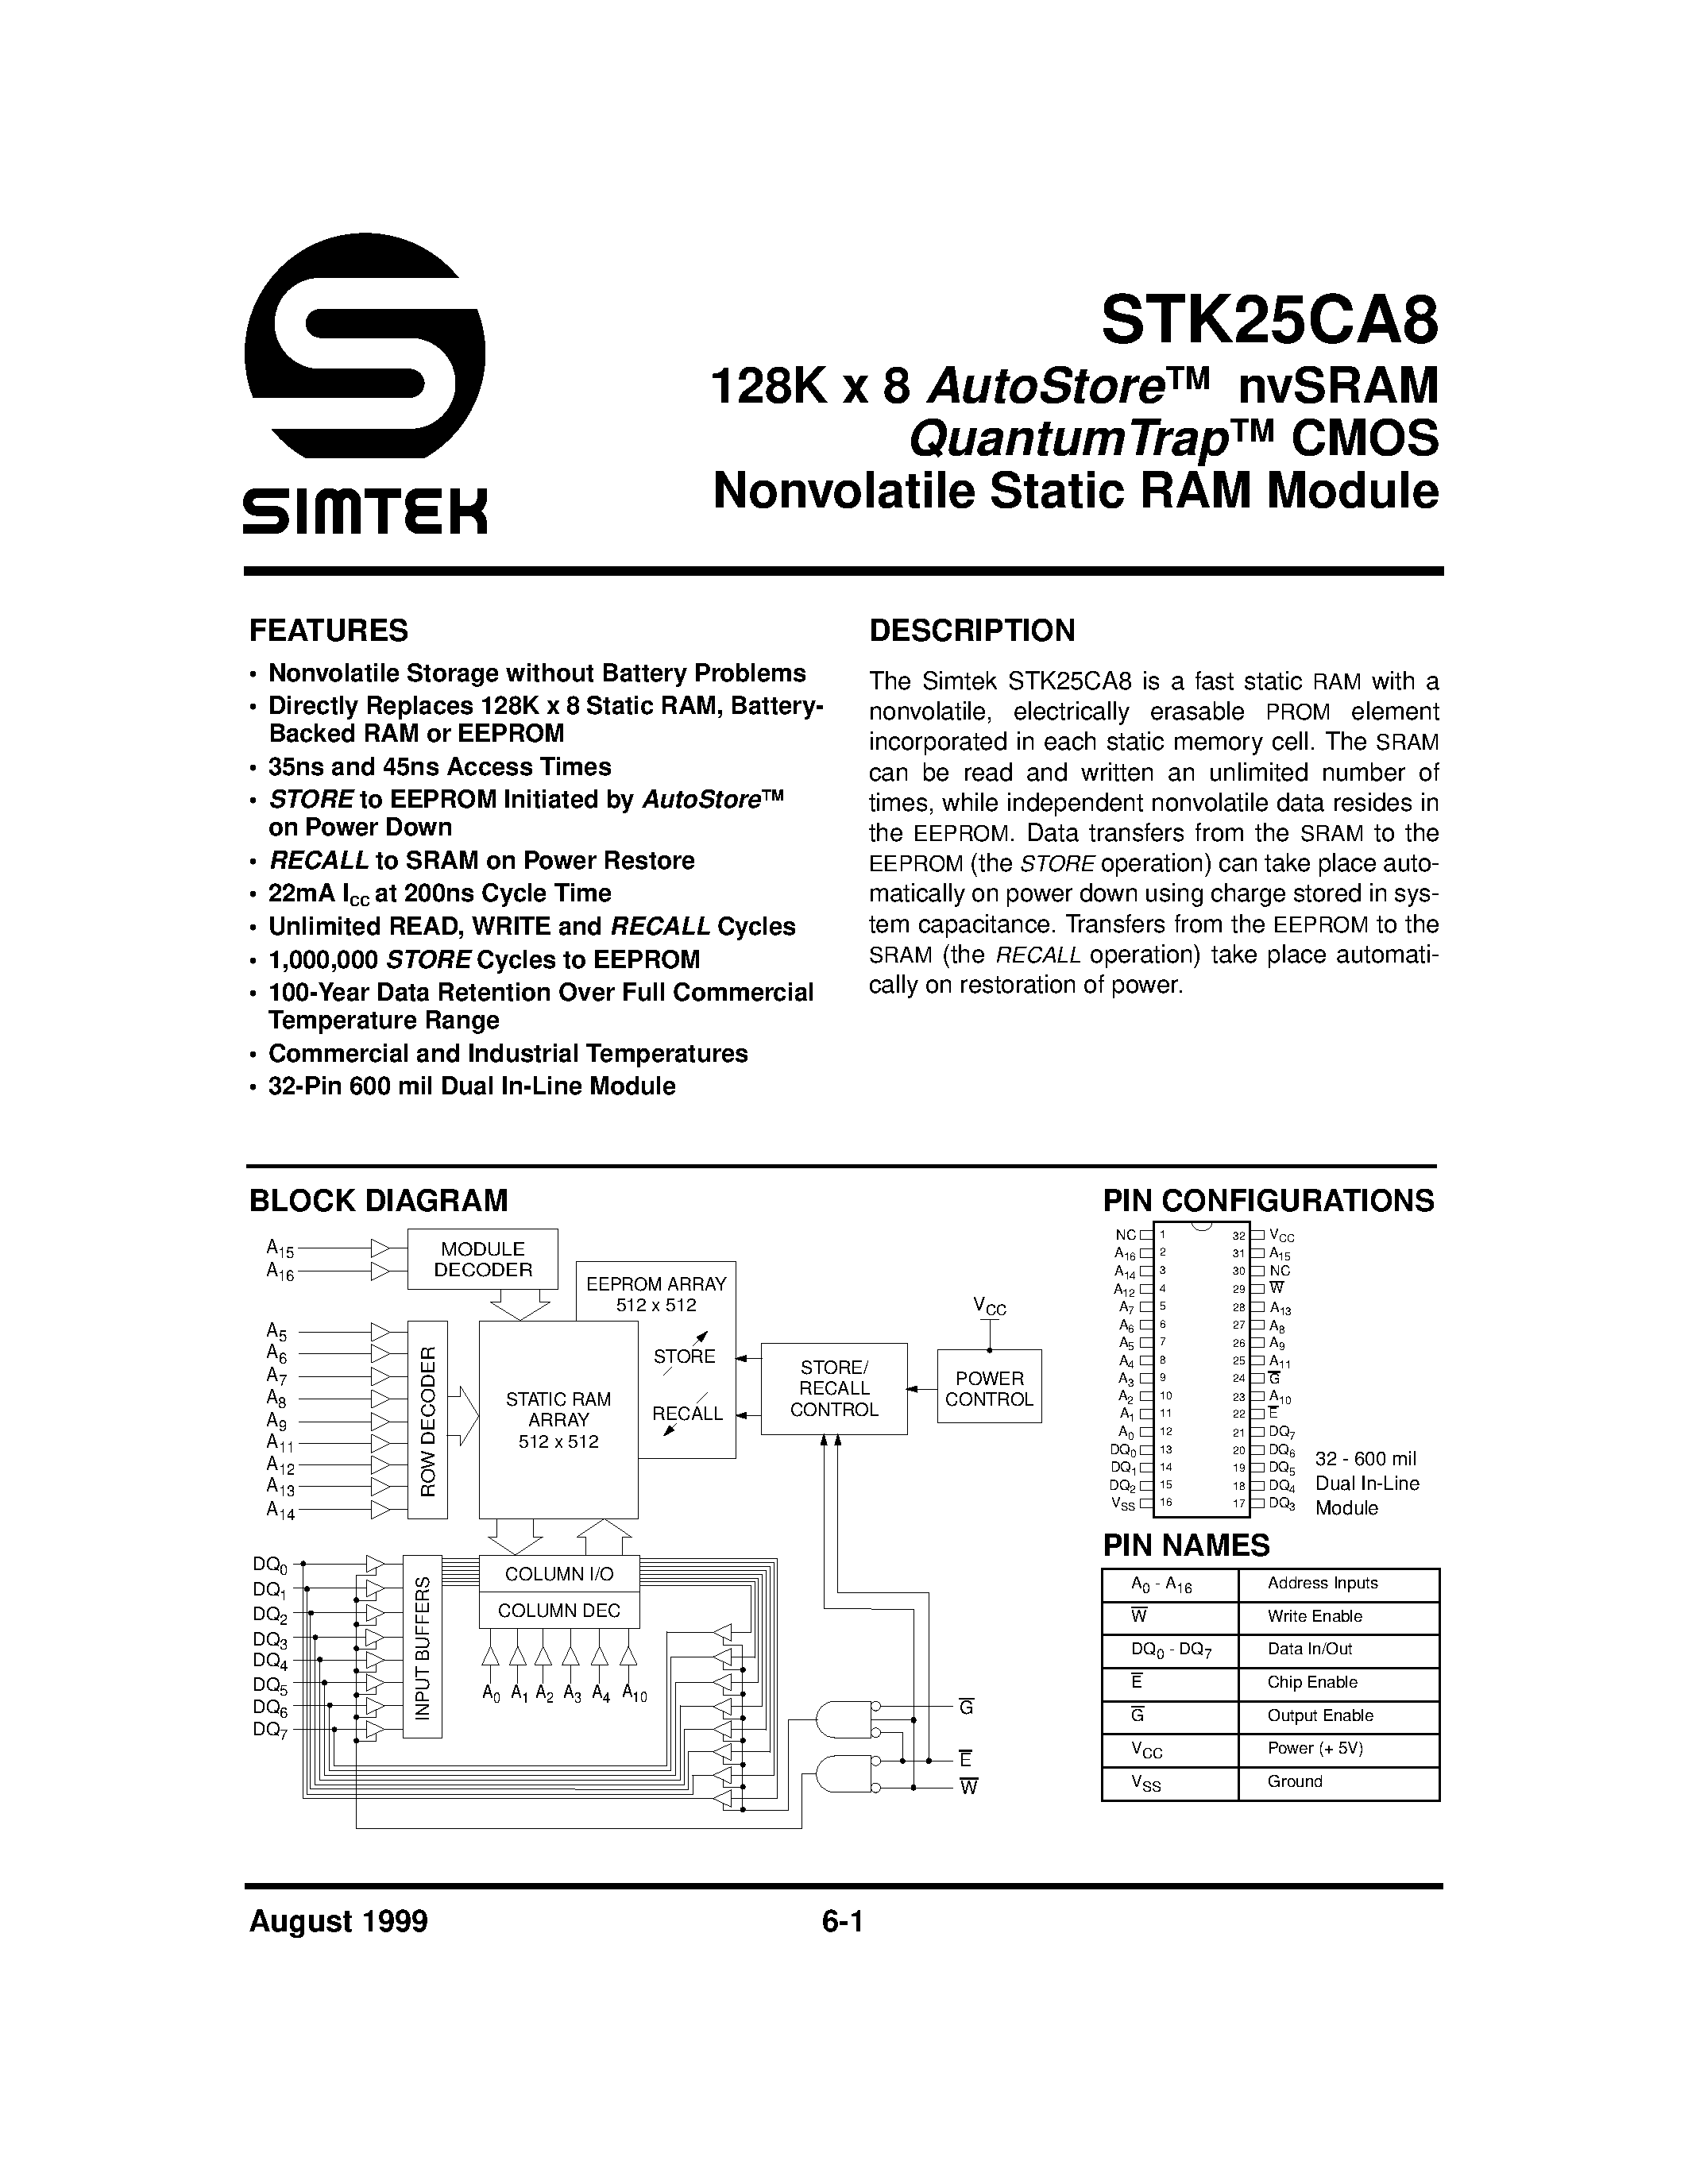 Даташит STK25CA8 - 128K x 8 AutoStore nvSRAM CMOS Nonvolatile Static RAM Module страница 1